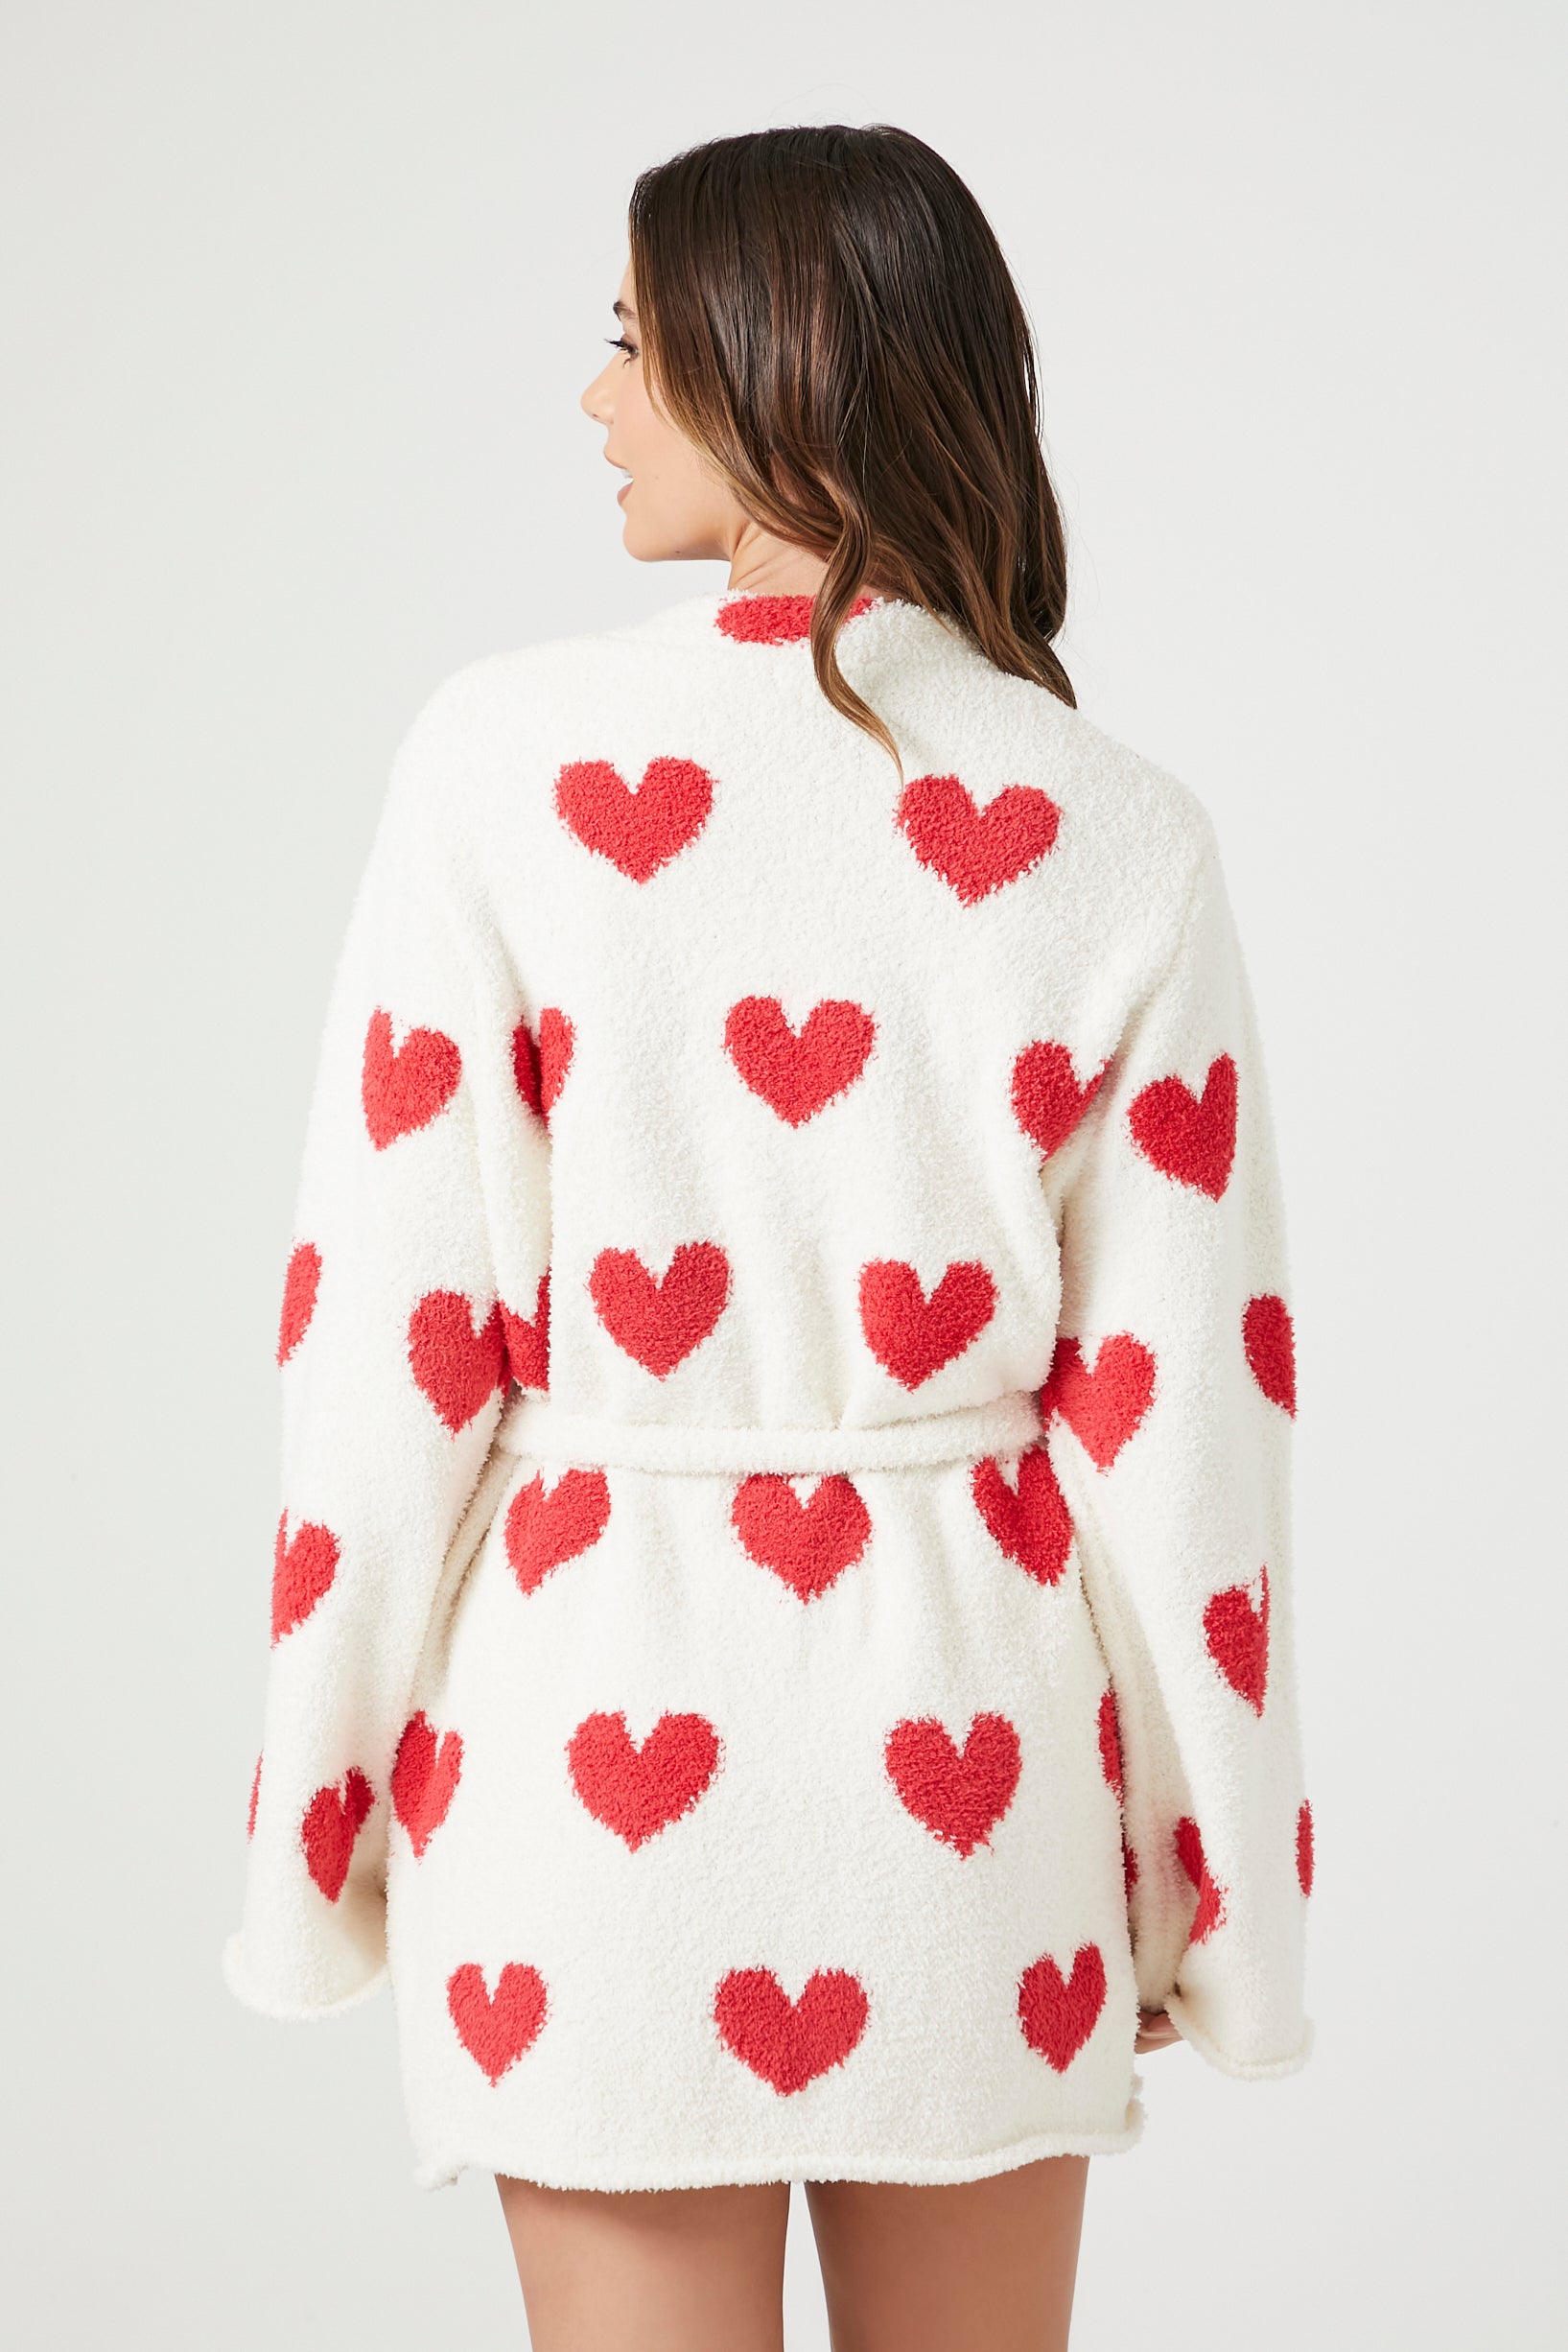 Plush Heart Print Robe